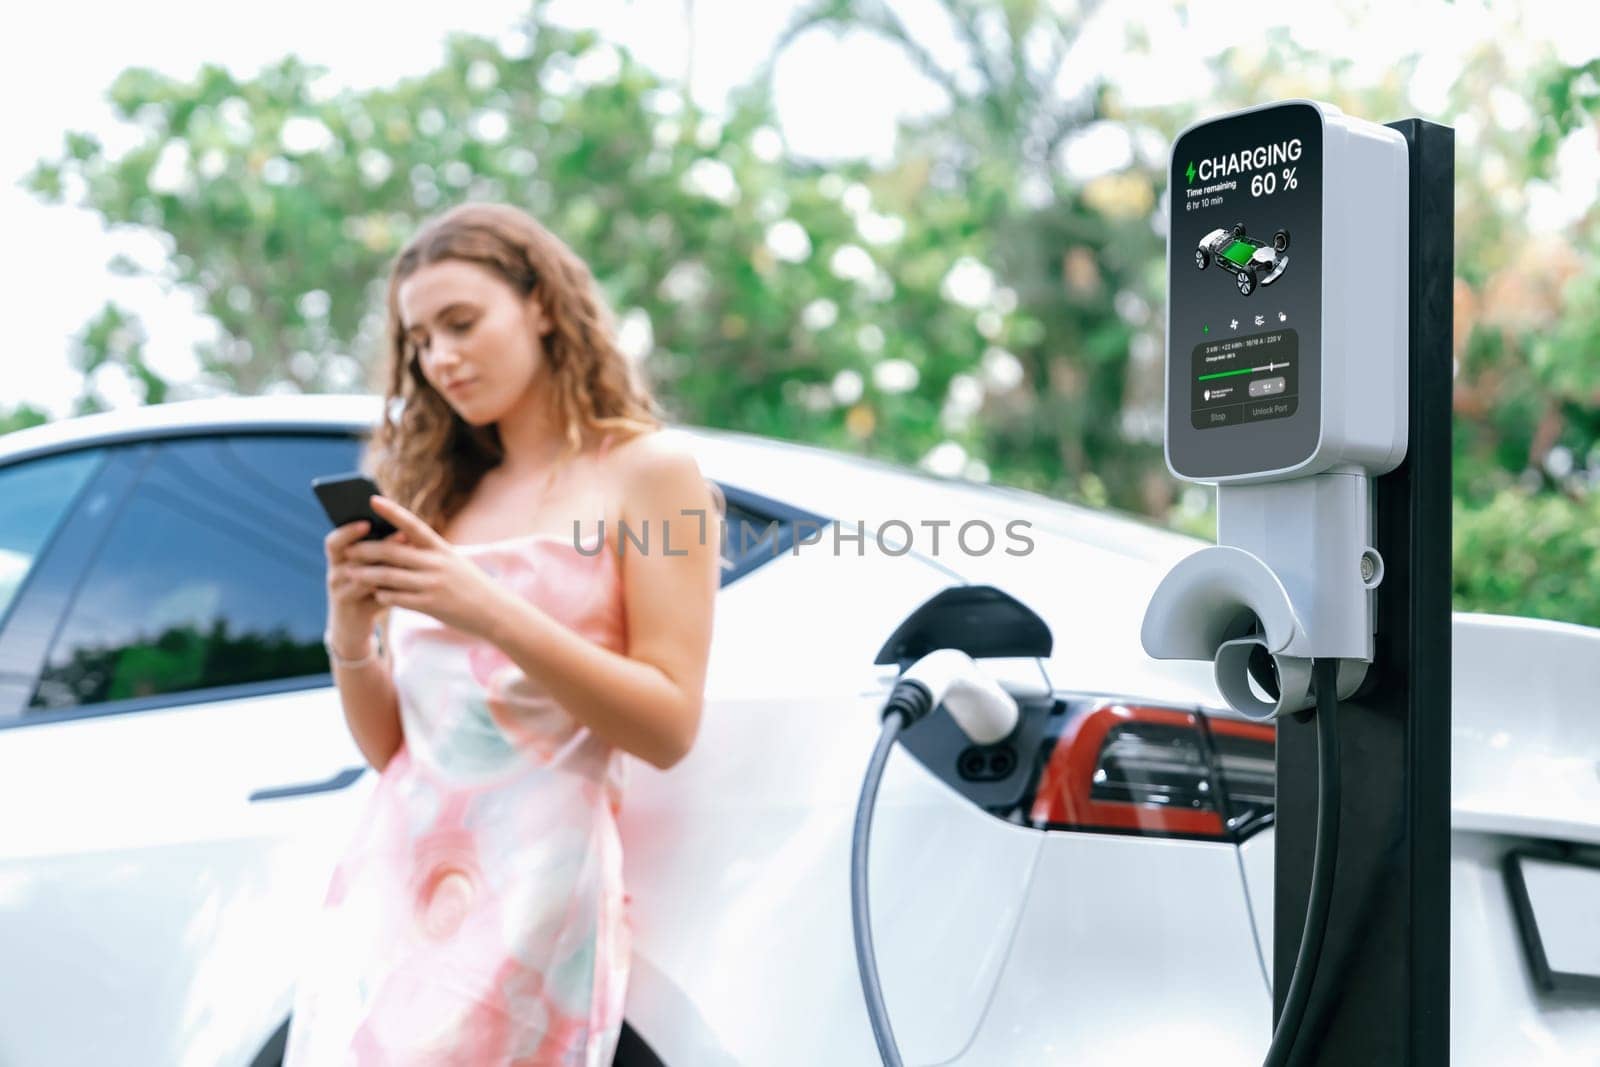 Focused charging station recharging EV car on blurred background. Synchronos by biancoblue